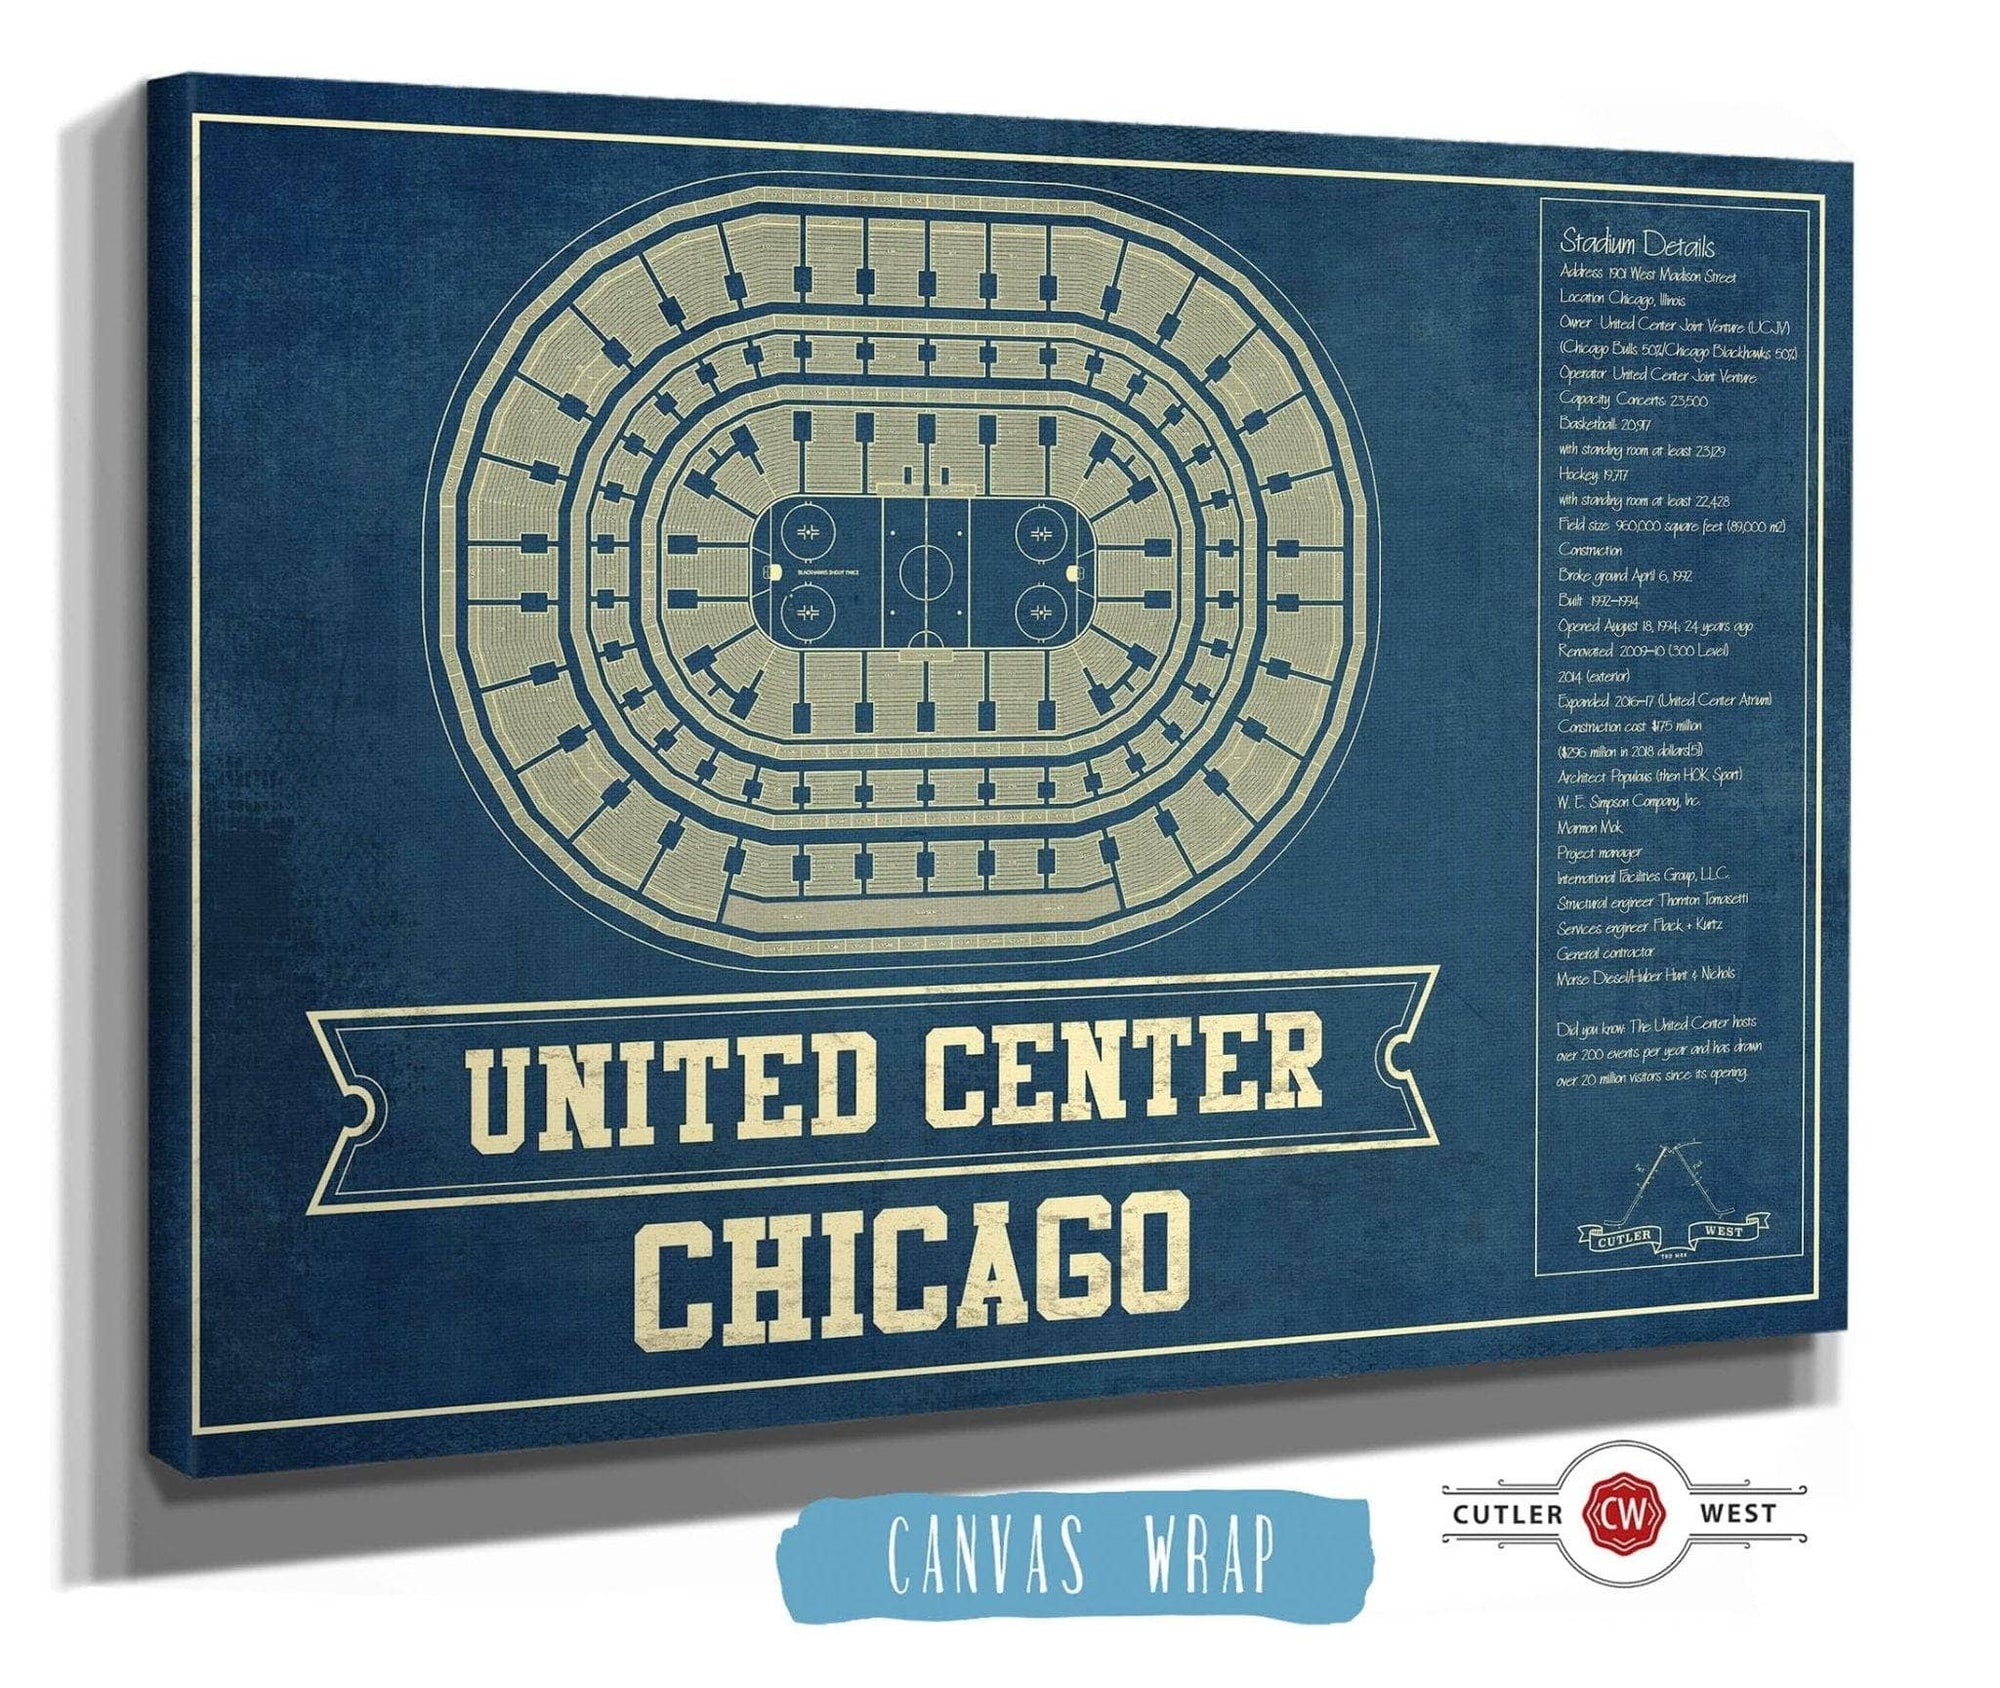 Cutler West 14" x 11" / Stretched Canvas Wrap Chicago Blackhawks - United Center Vintage Hockey Blueprint NHL Print 933350189_79010